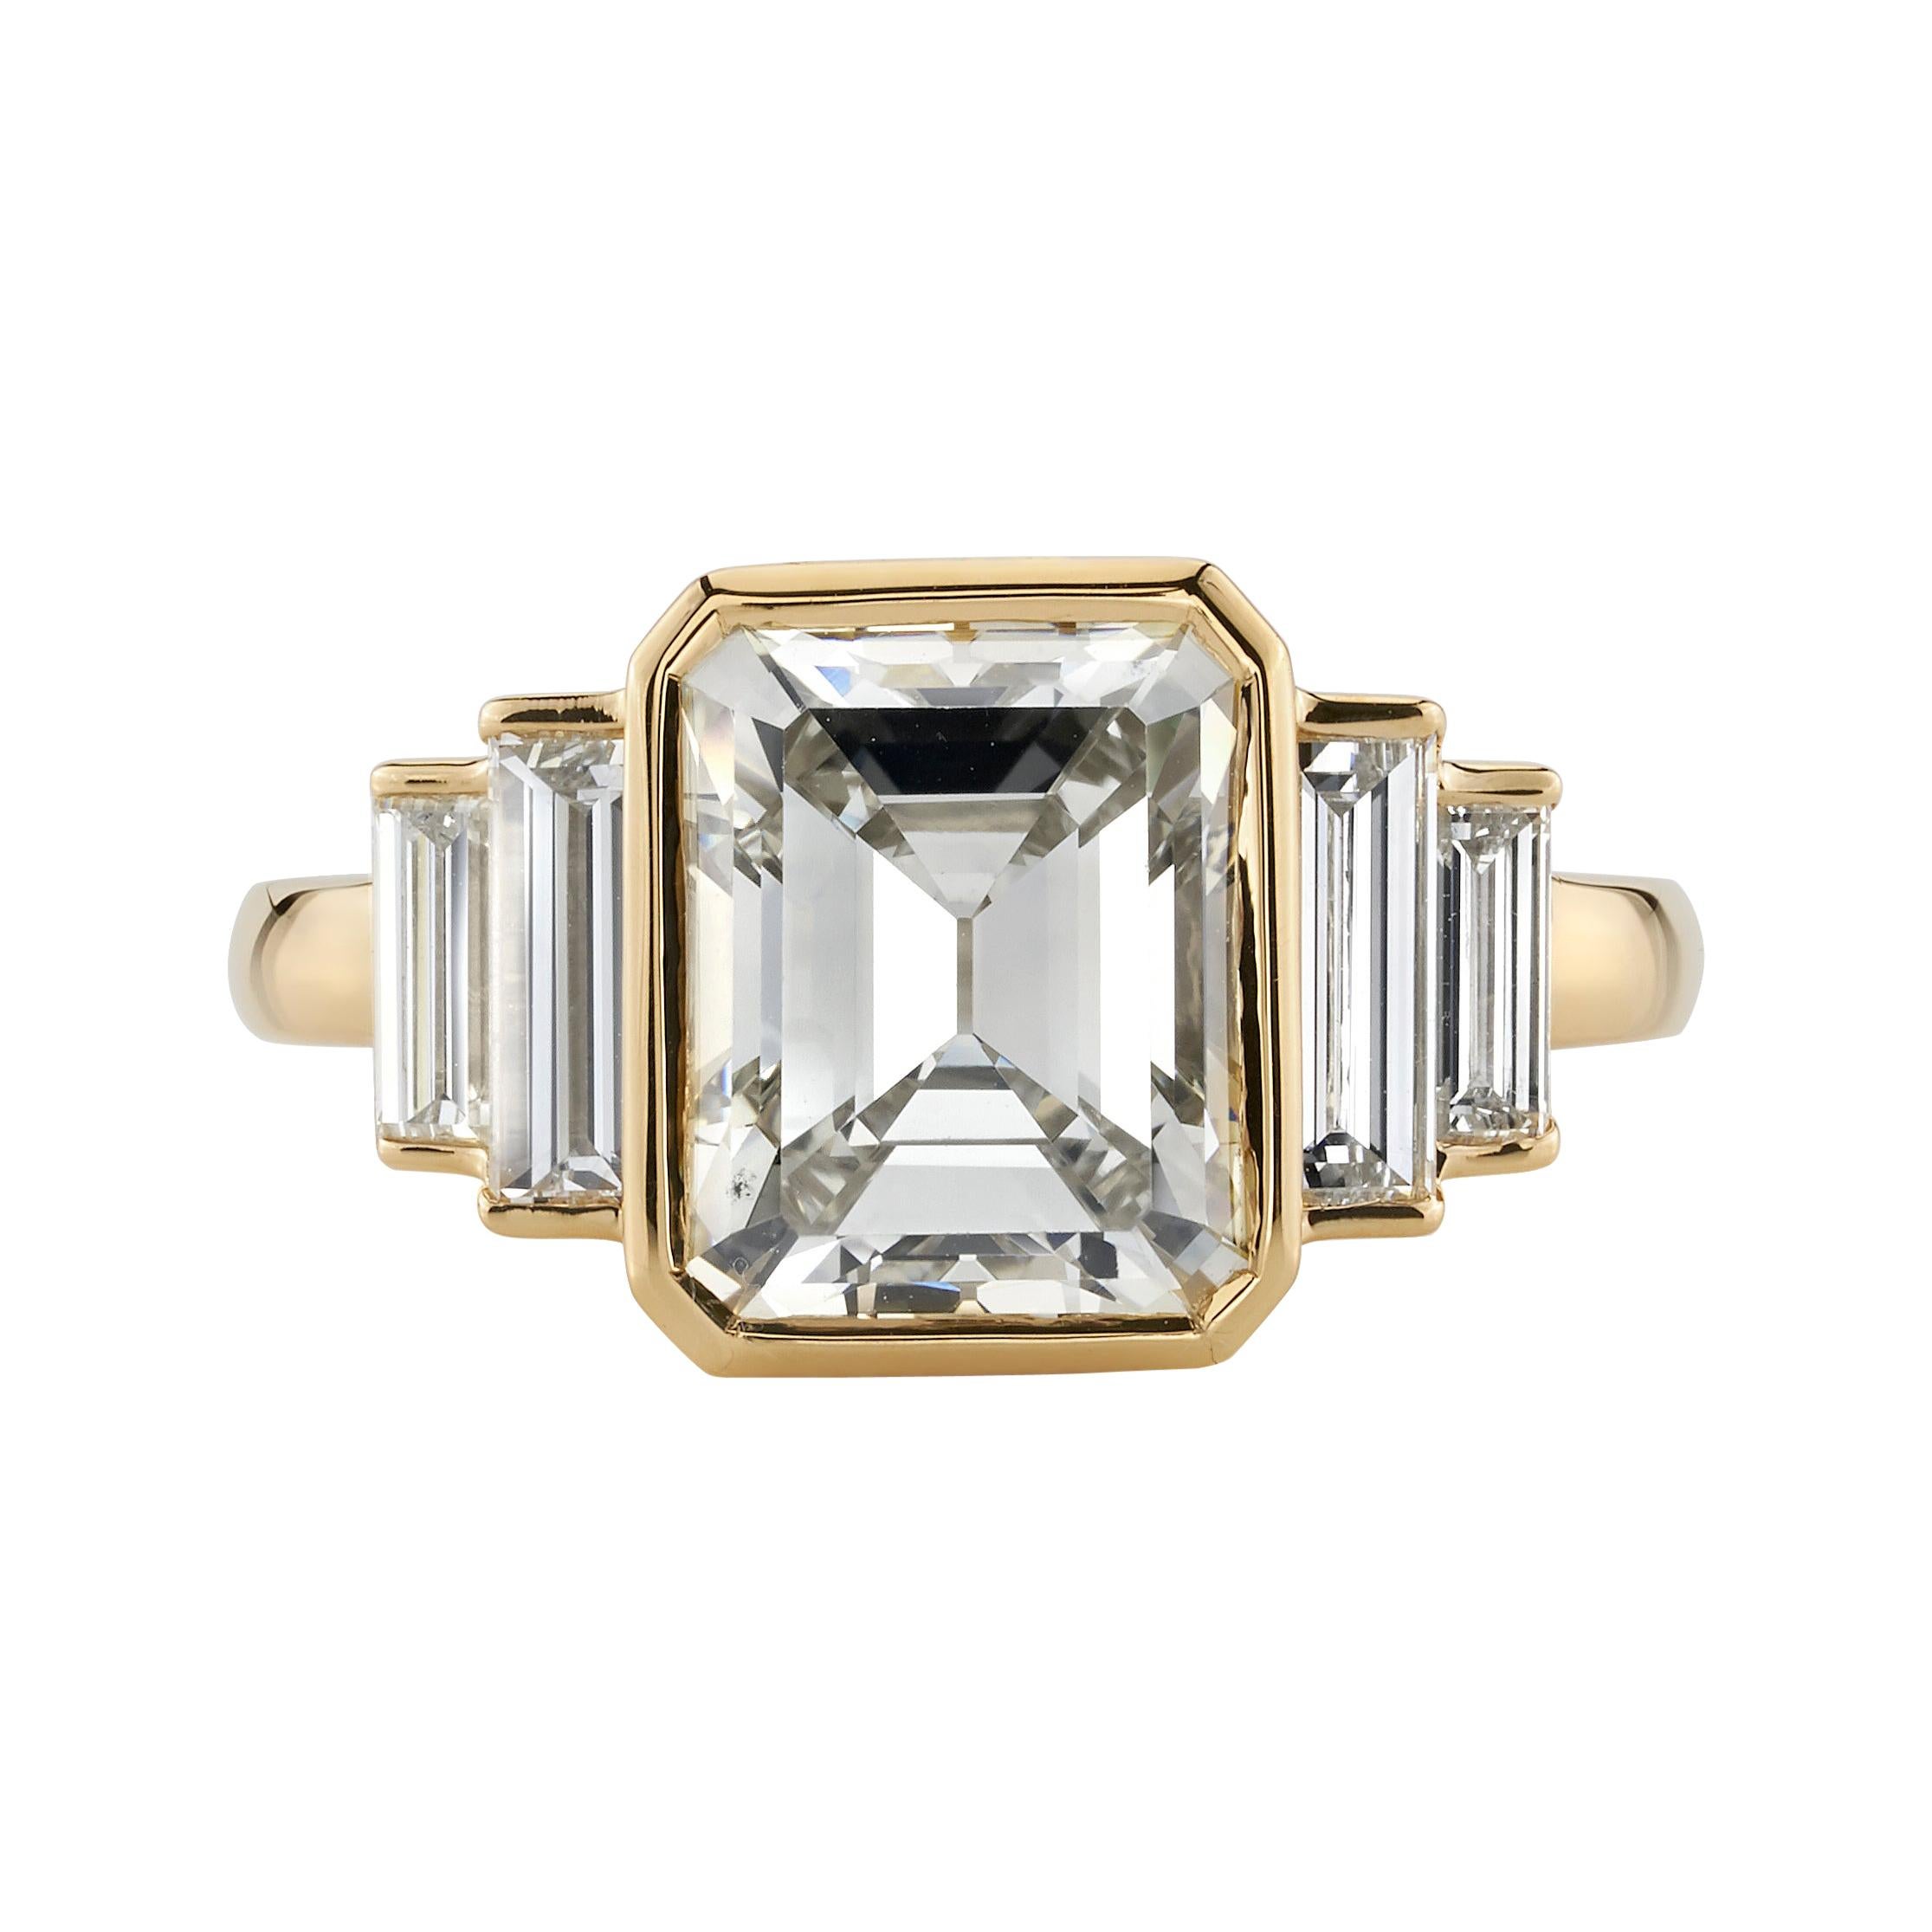 3.34 Carat Emerald Cut Diamond Set in an 18 Karat Yellow Gold Ring